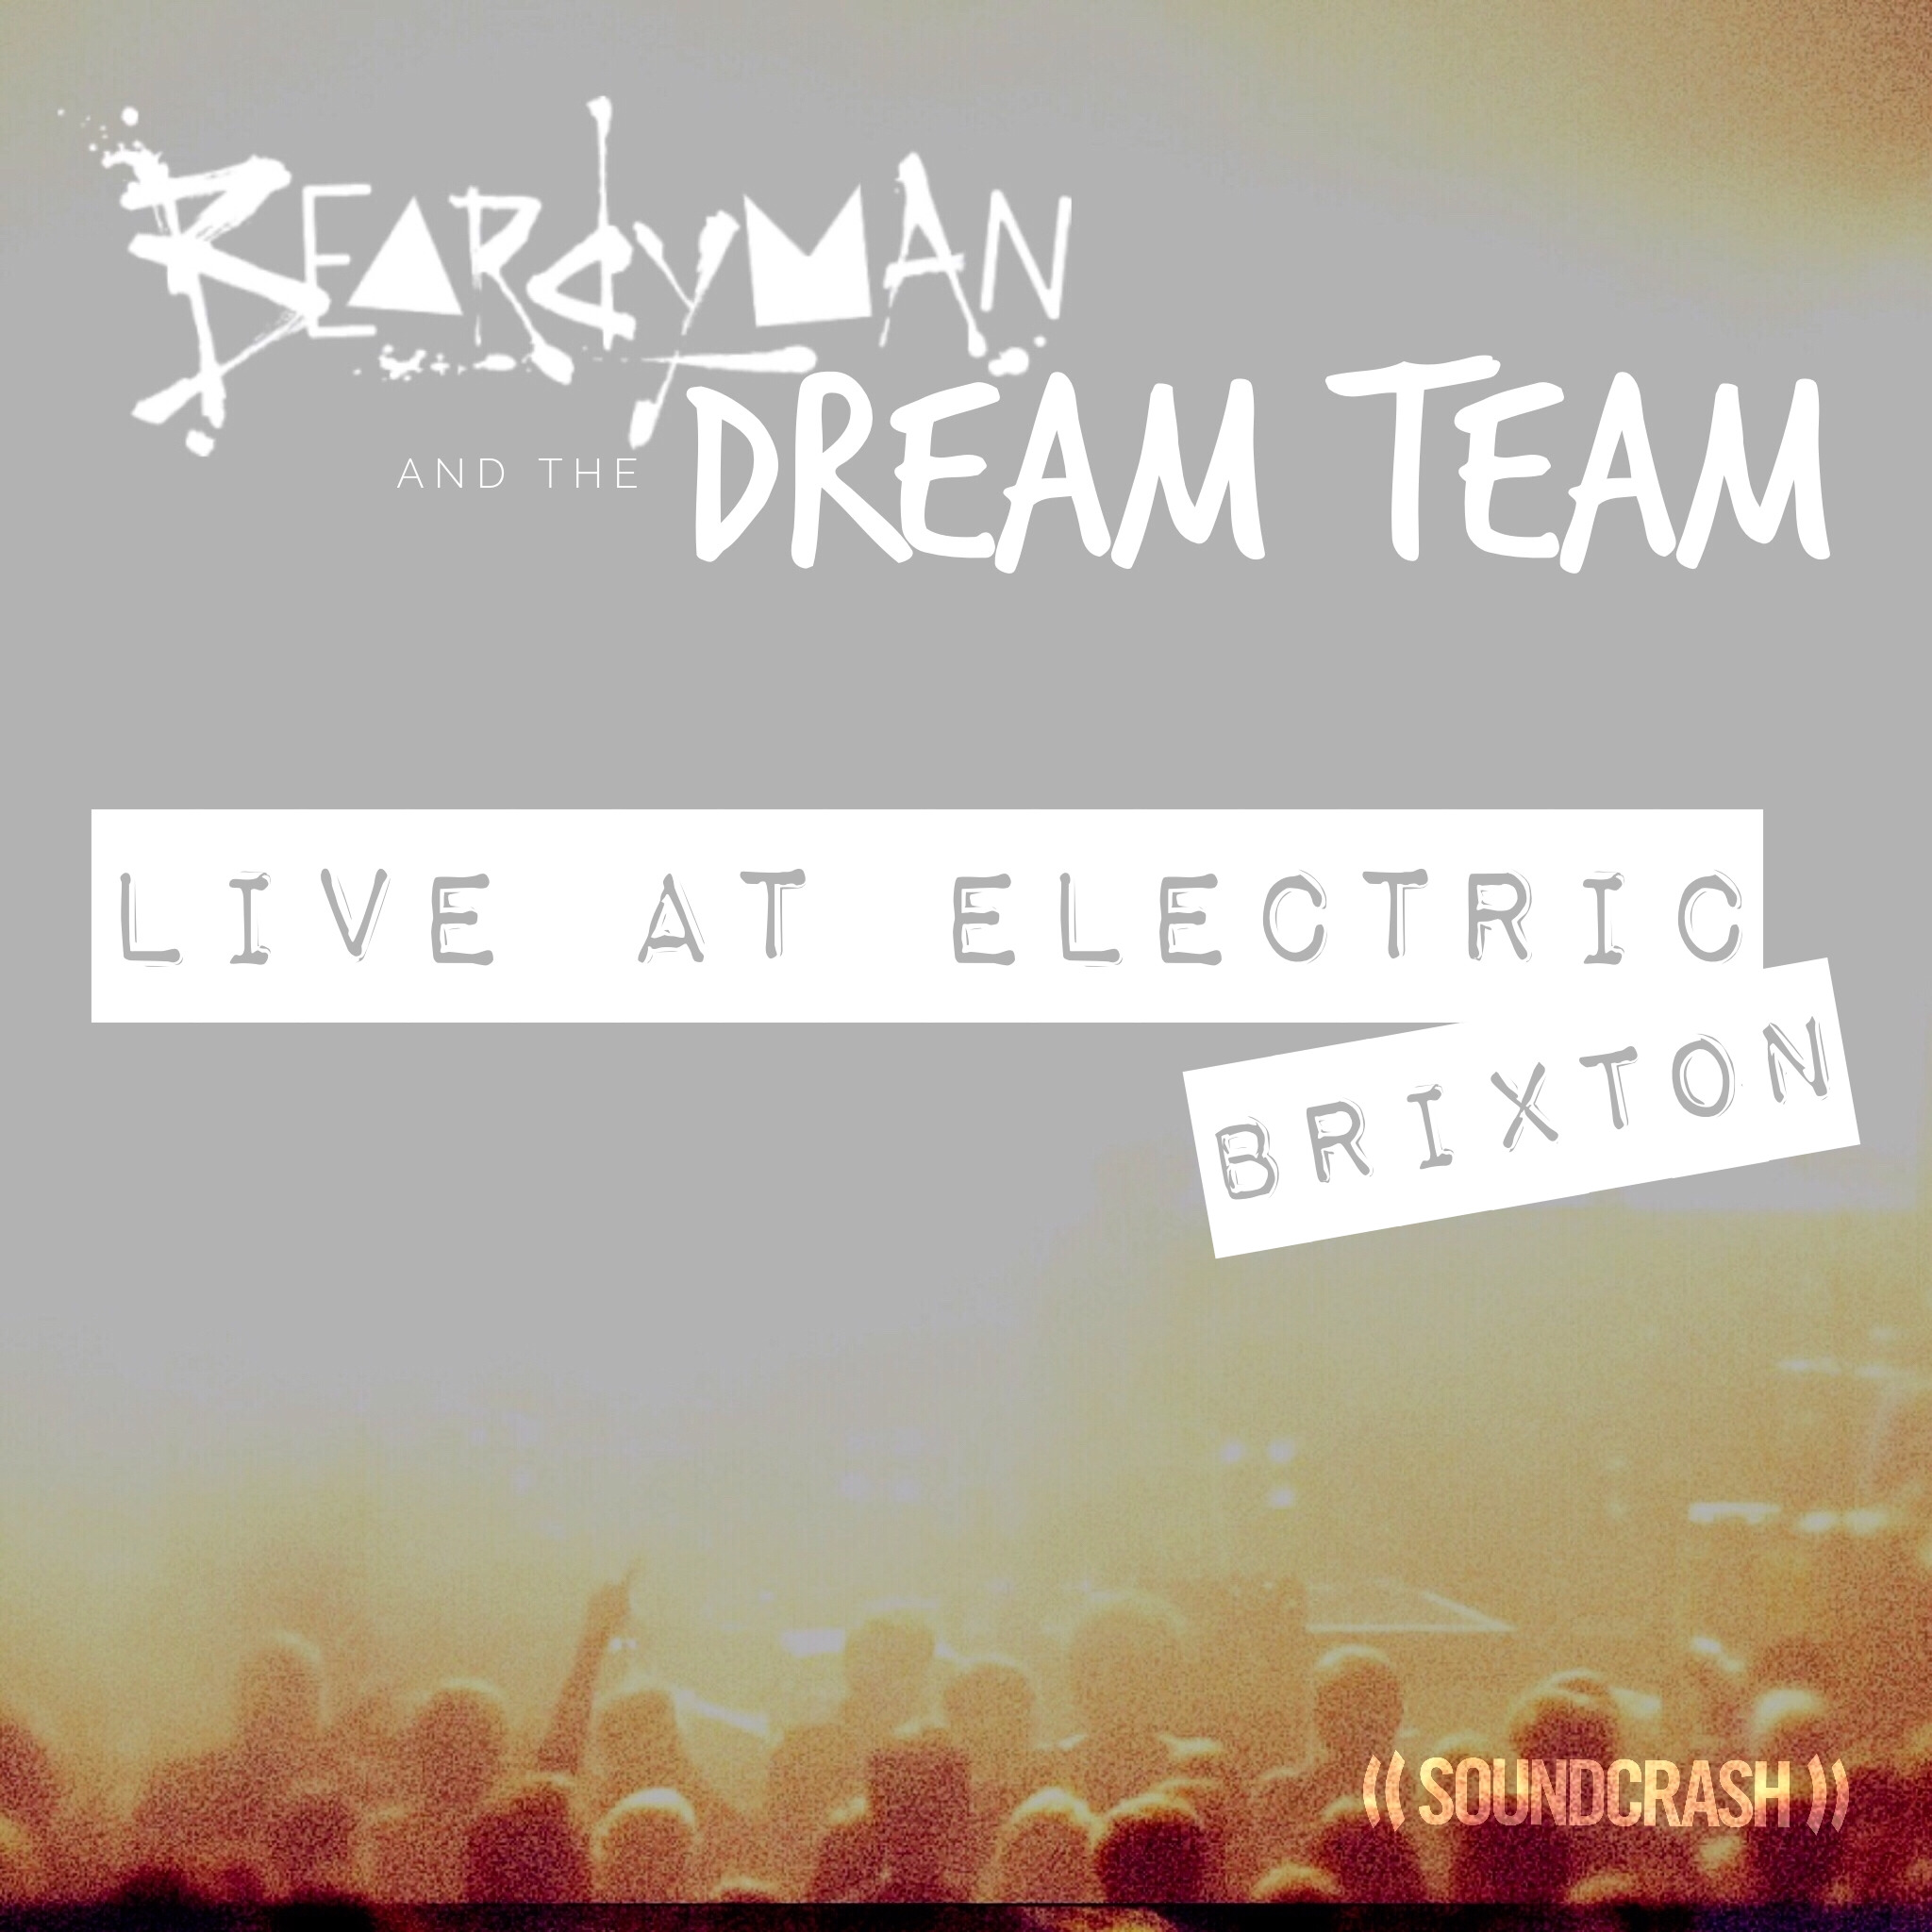 Beardyman presents The Dream Team, Live at Electric Brixton